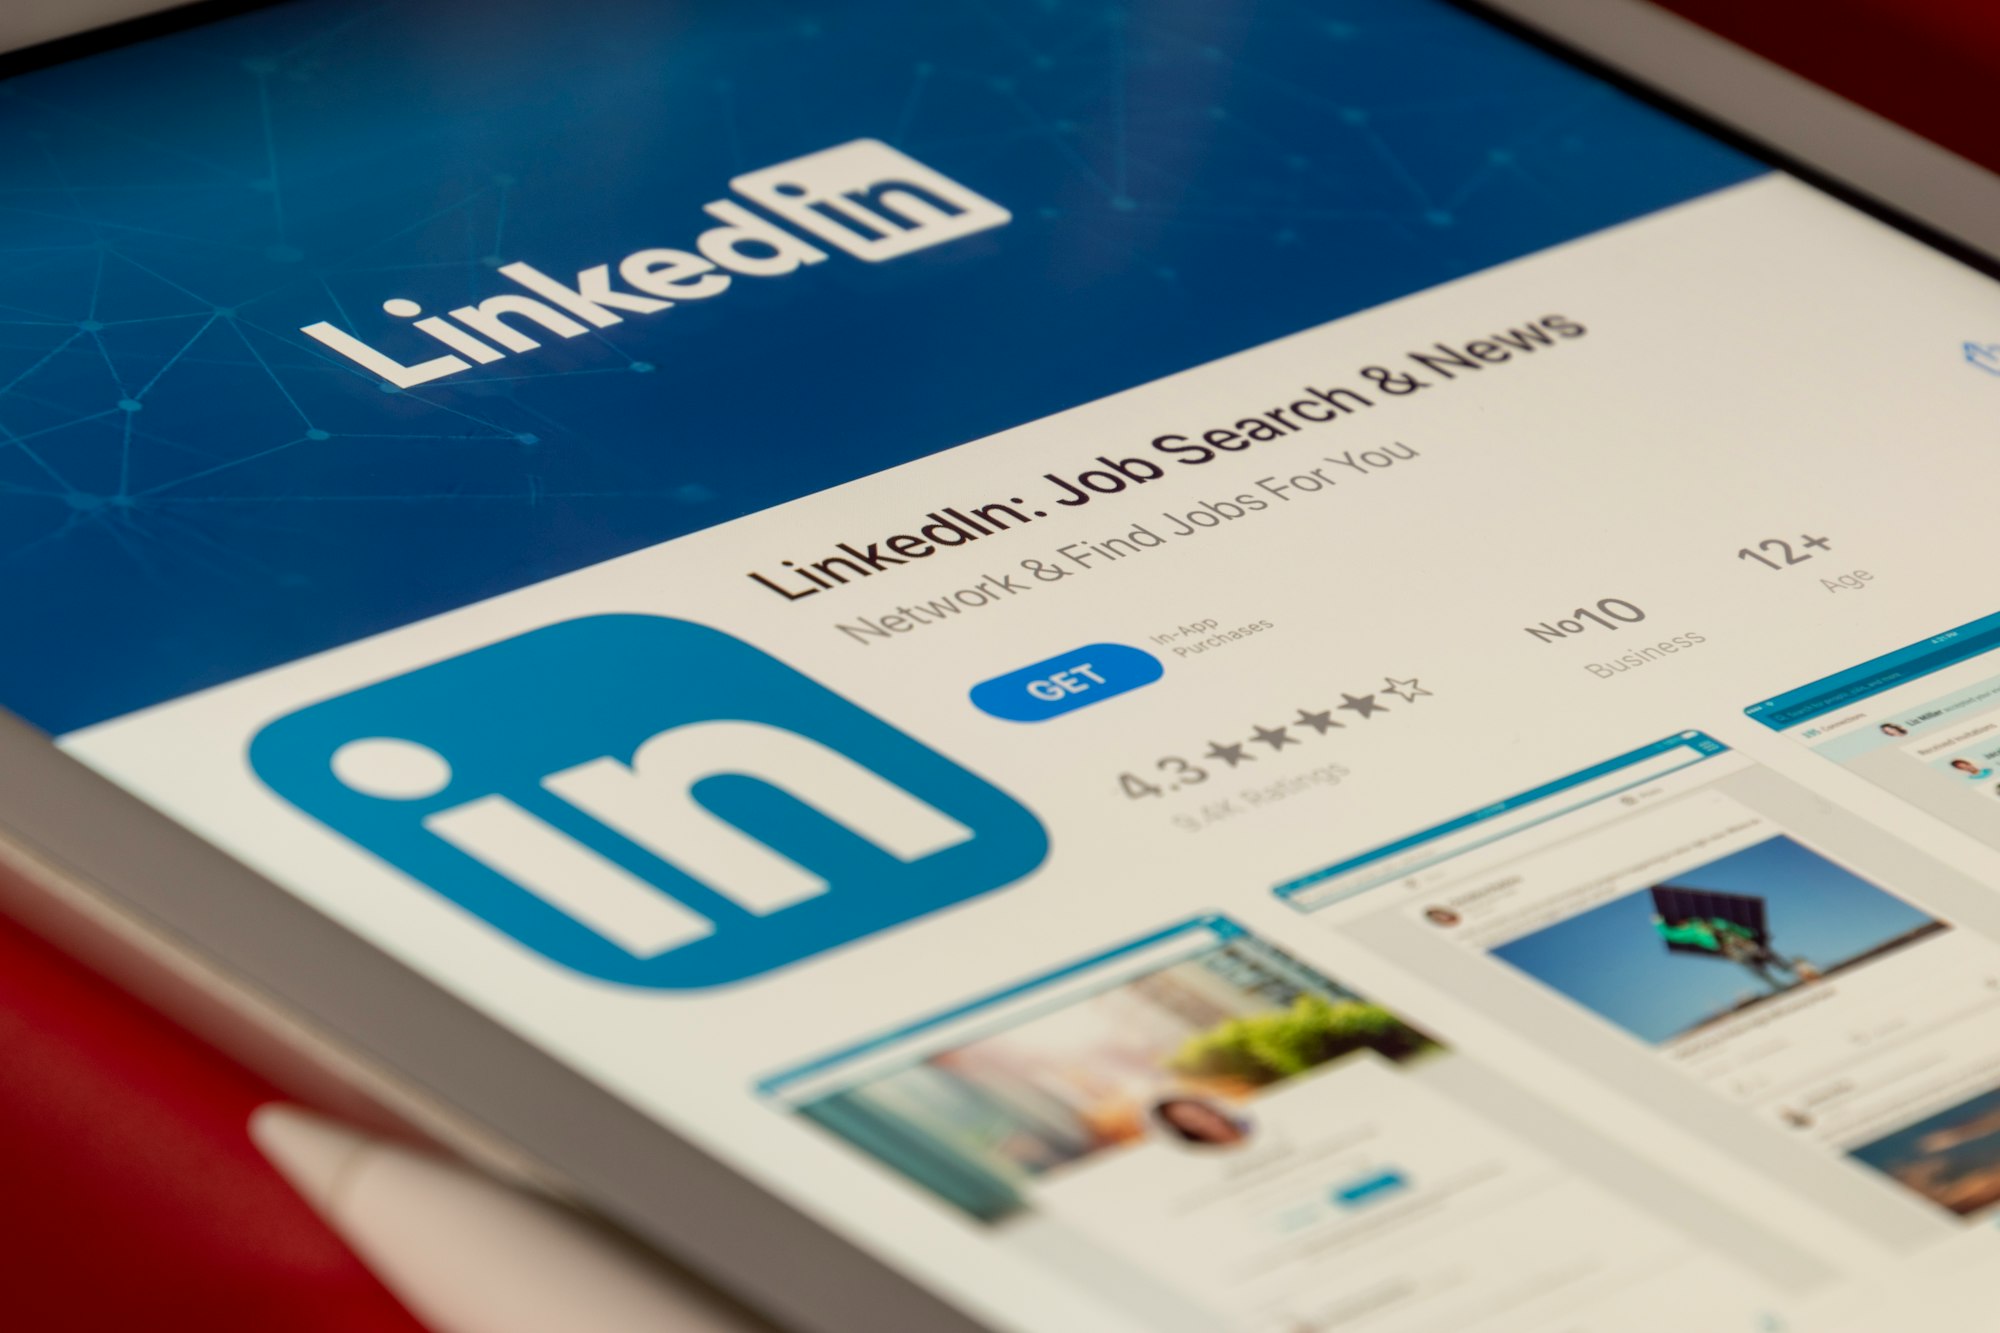 Após pressão, LinkedIn atualiza política sobre vagas afirmativas